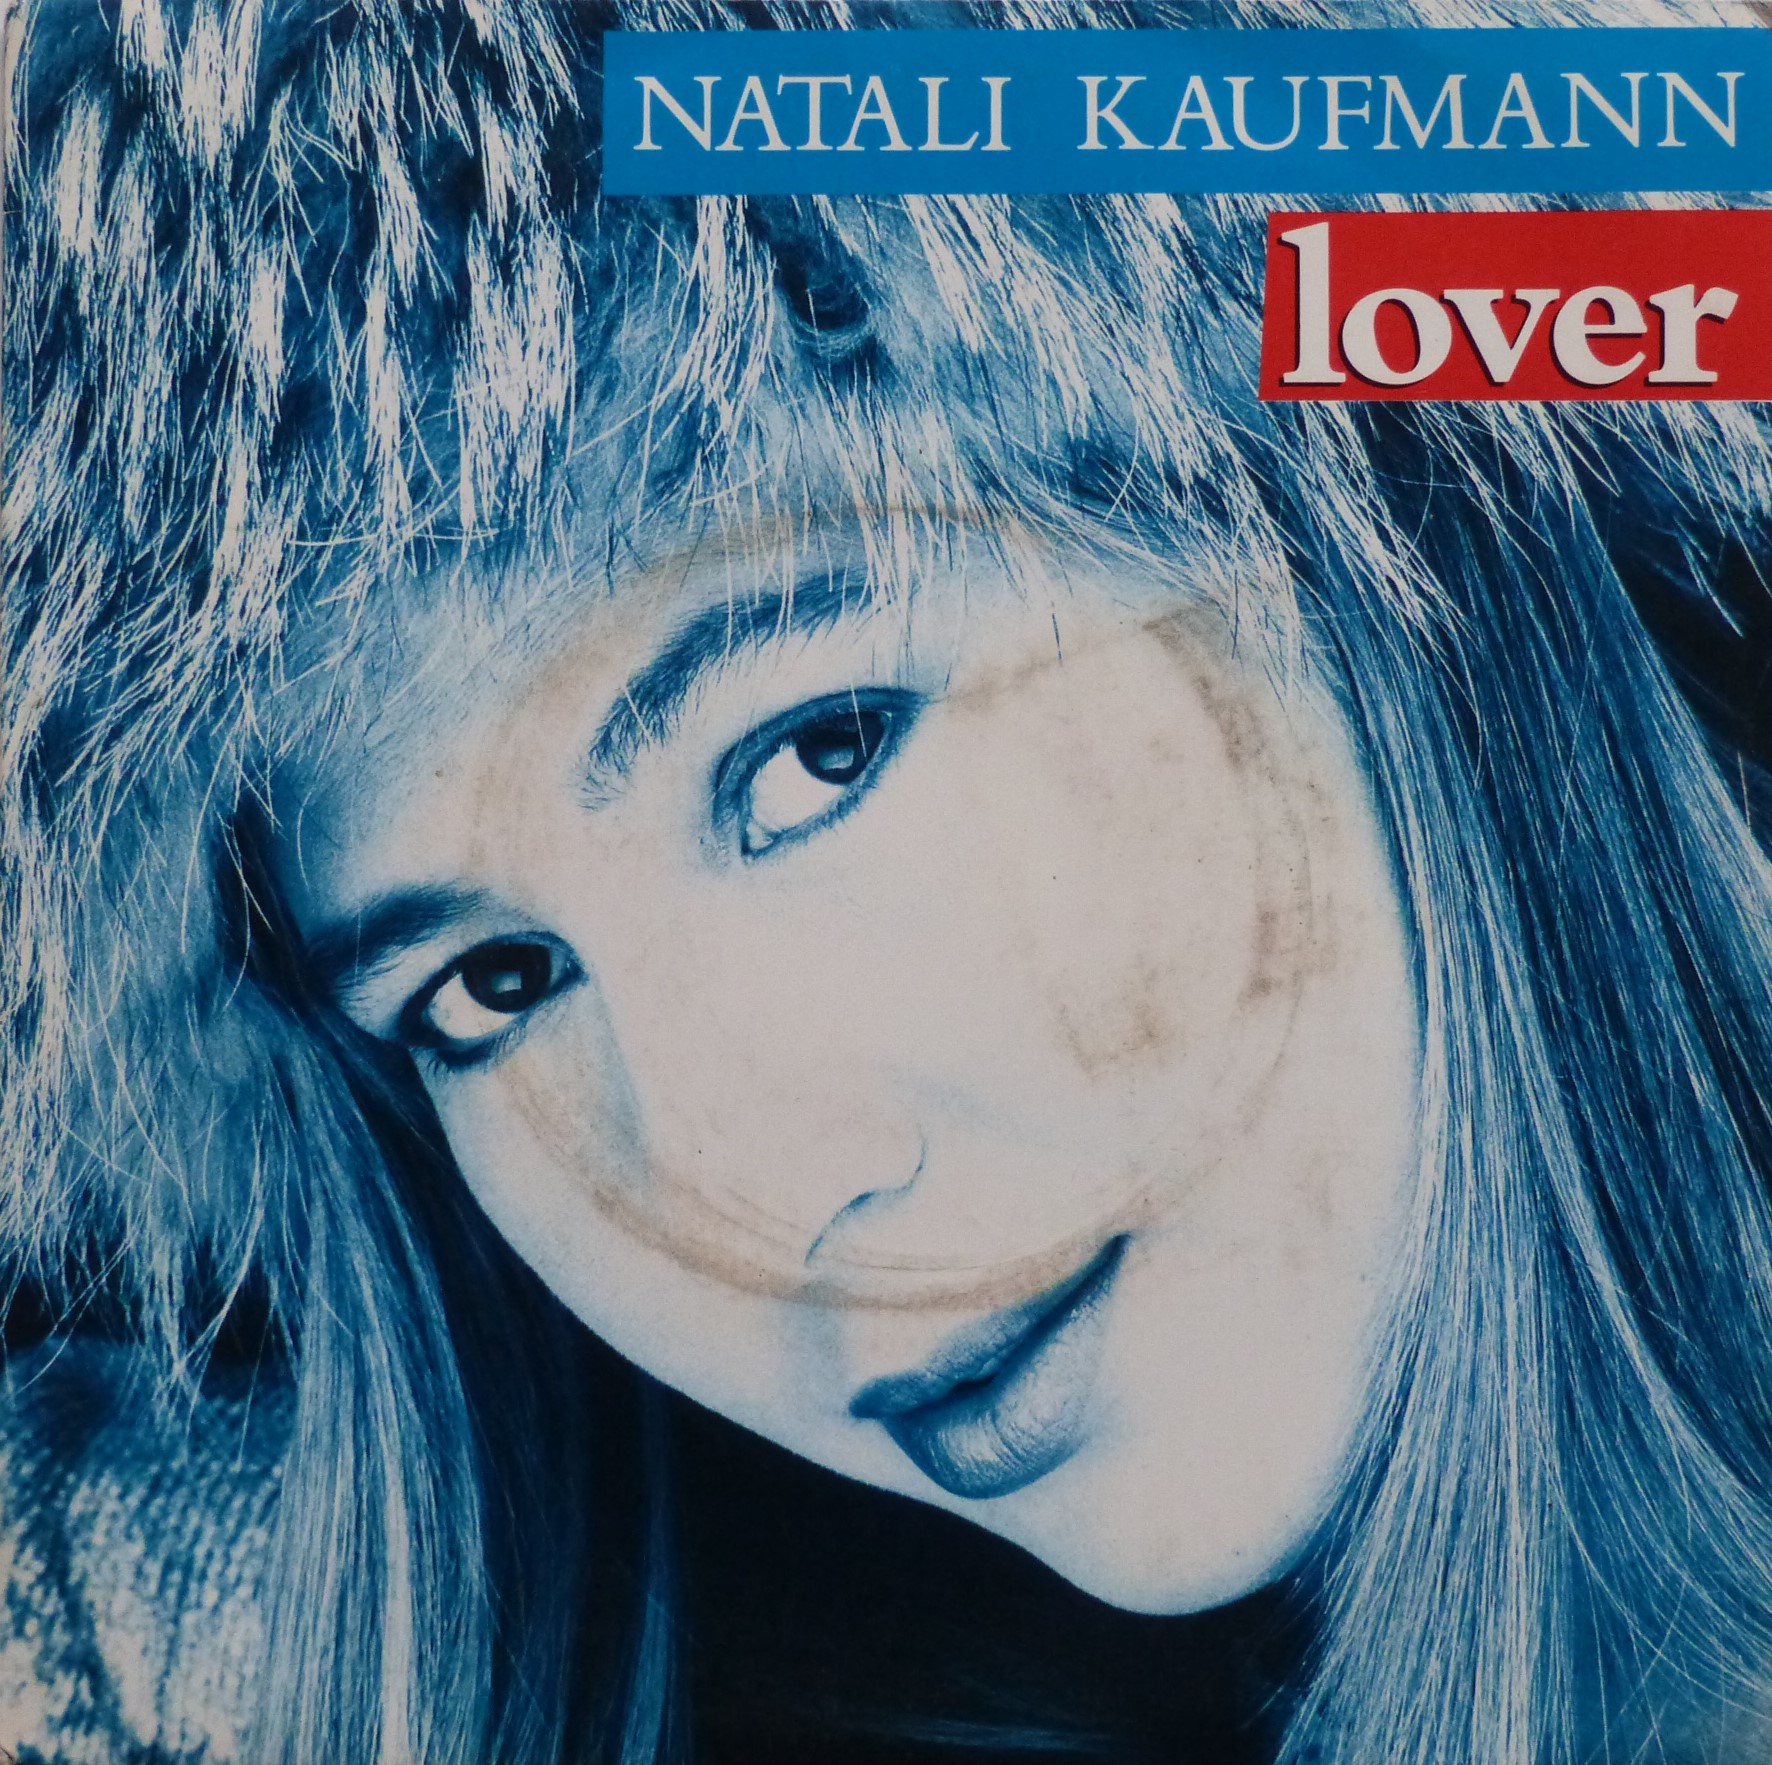 Natali Kaufmann, Lover